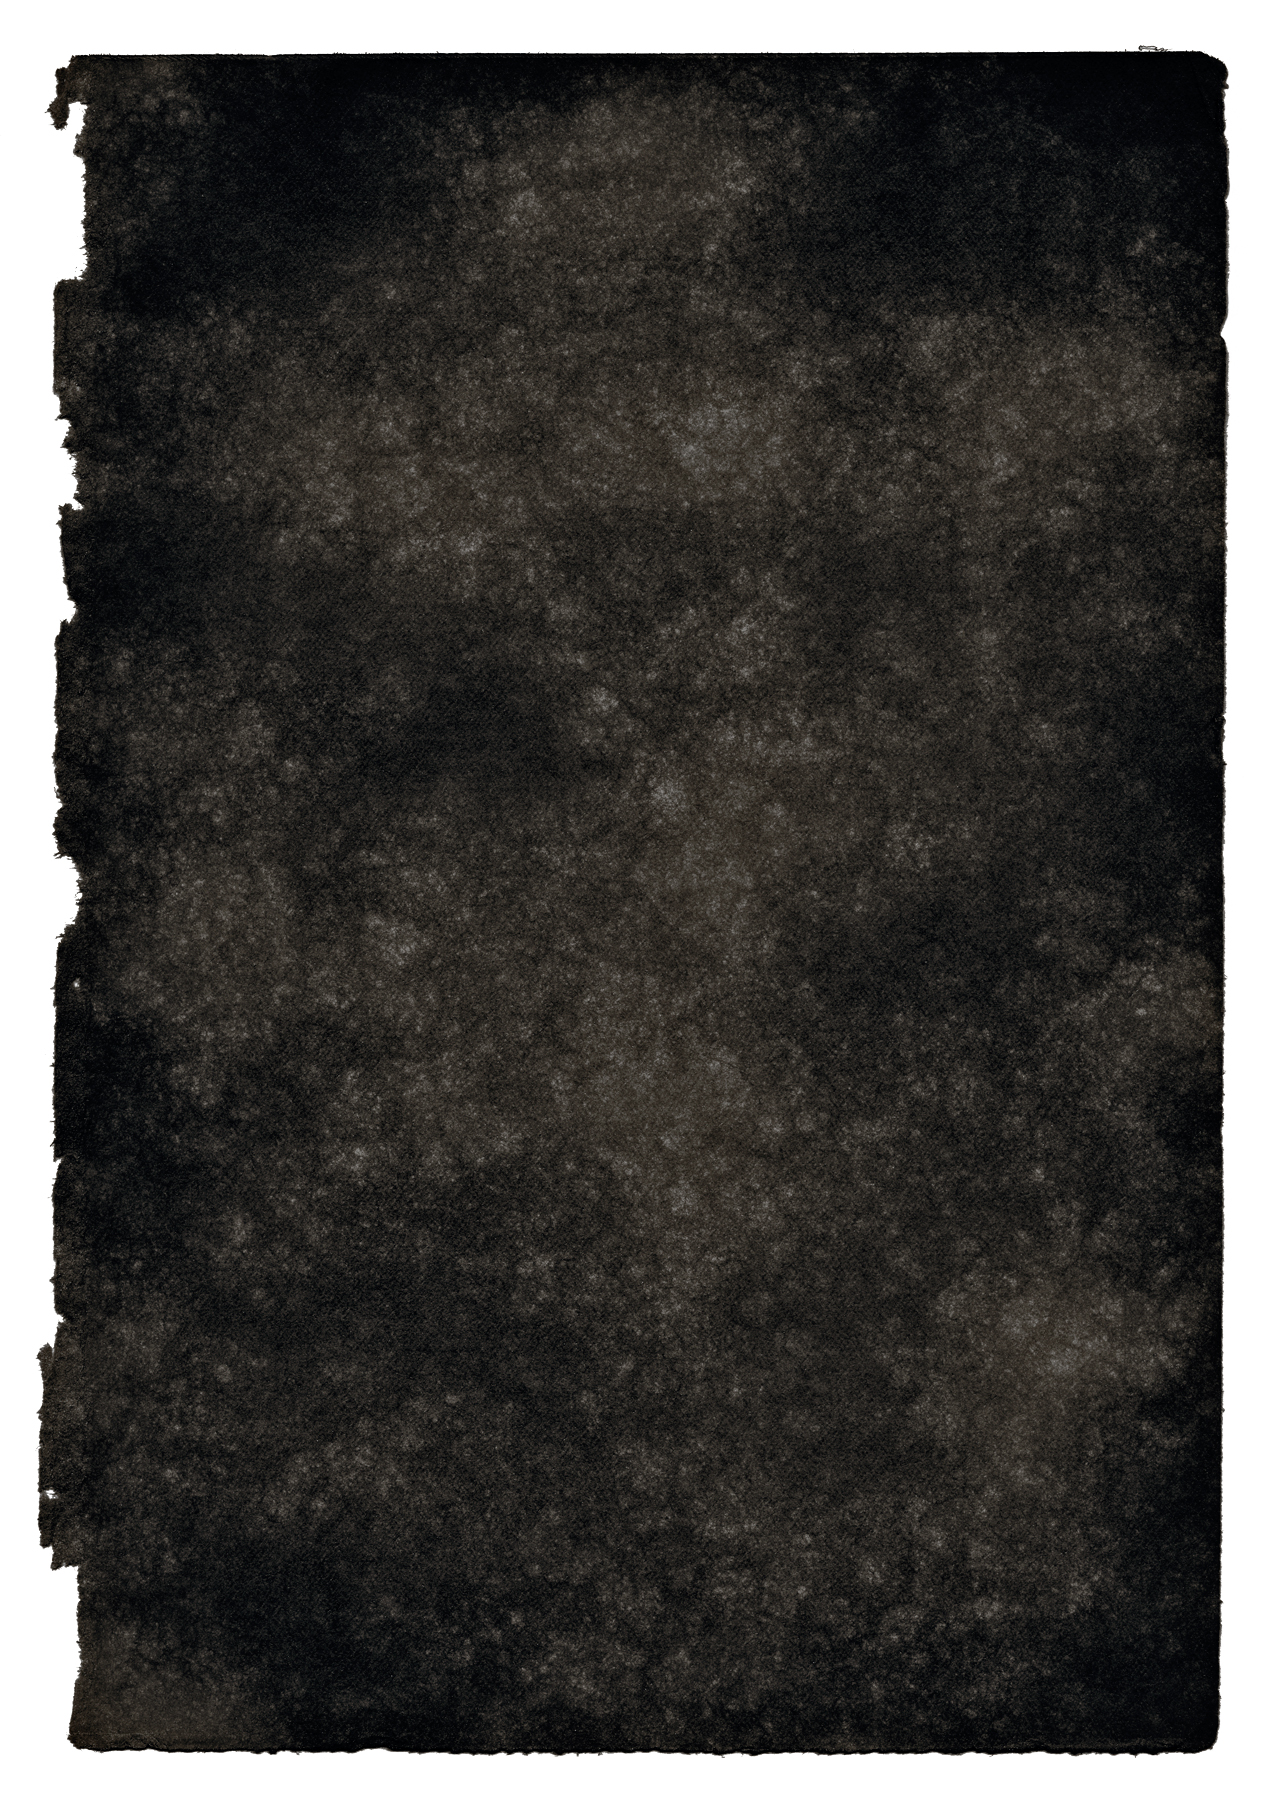 Vintage grunge paper - charred black photo